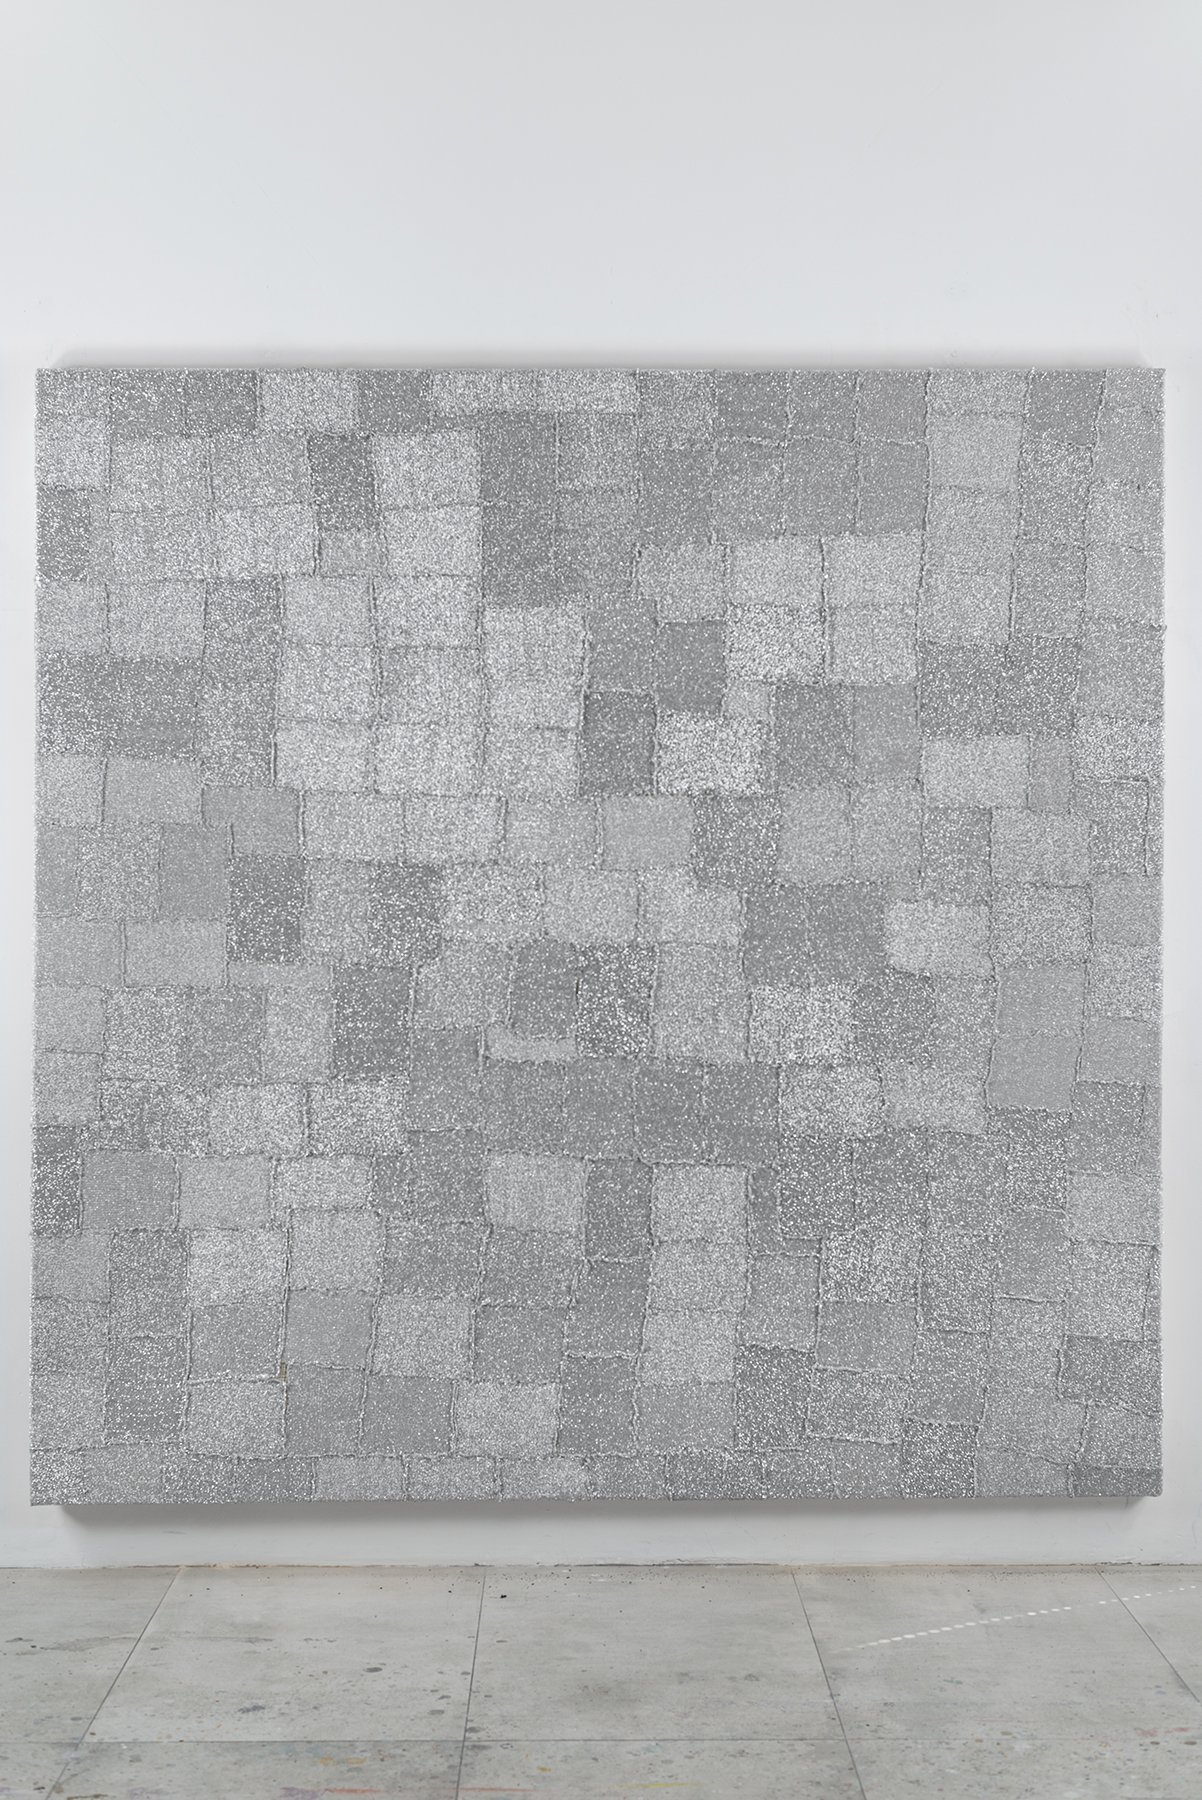   Beatriz Simón ,  It Cleans and Shines (Exploration of Texture) , 220 x 220 cm | 86.6 x 86.6 inch, 2021. Artist’s studio, Mexico City. Photo by César Palomino. 